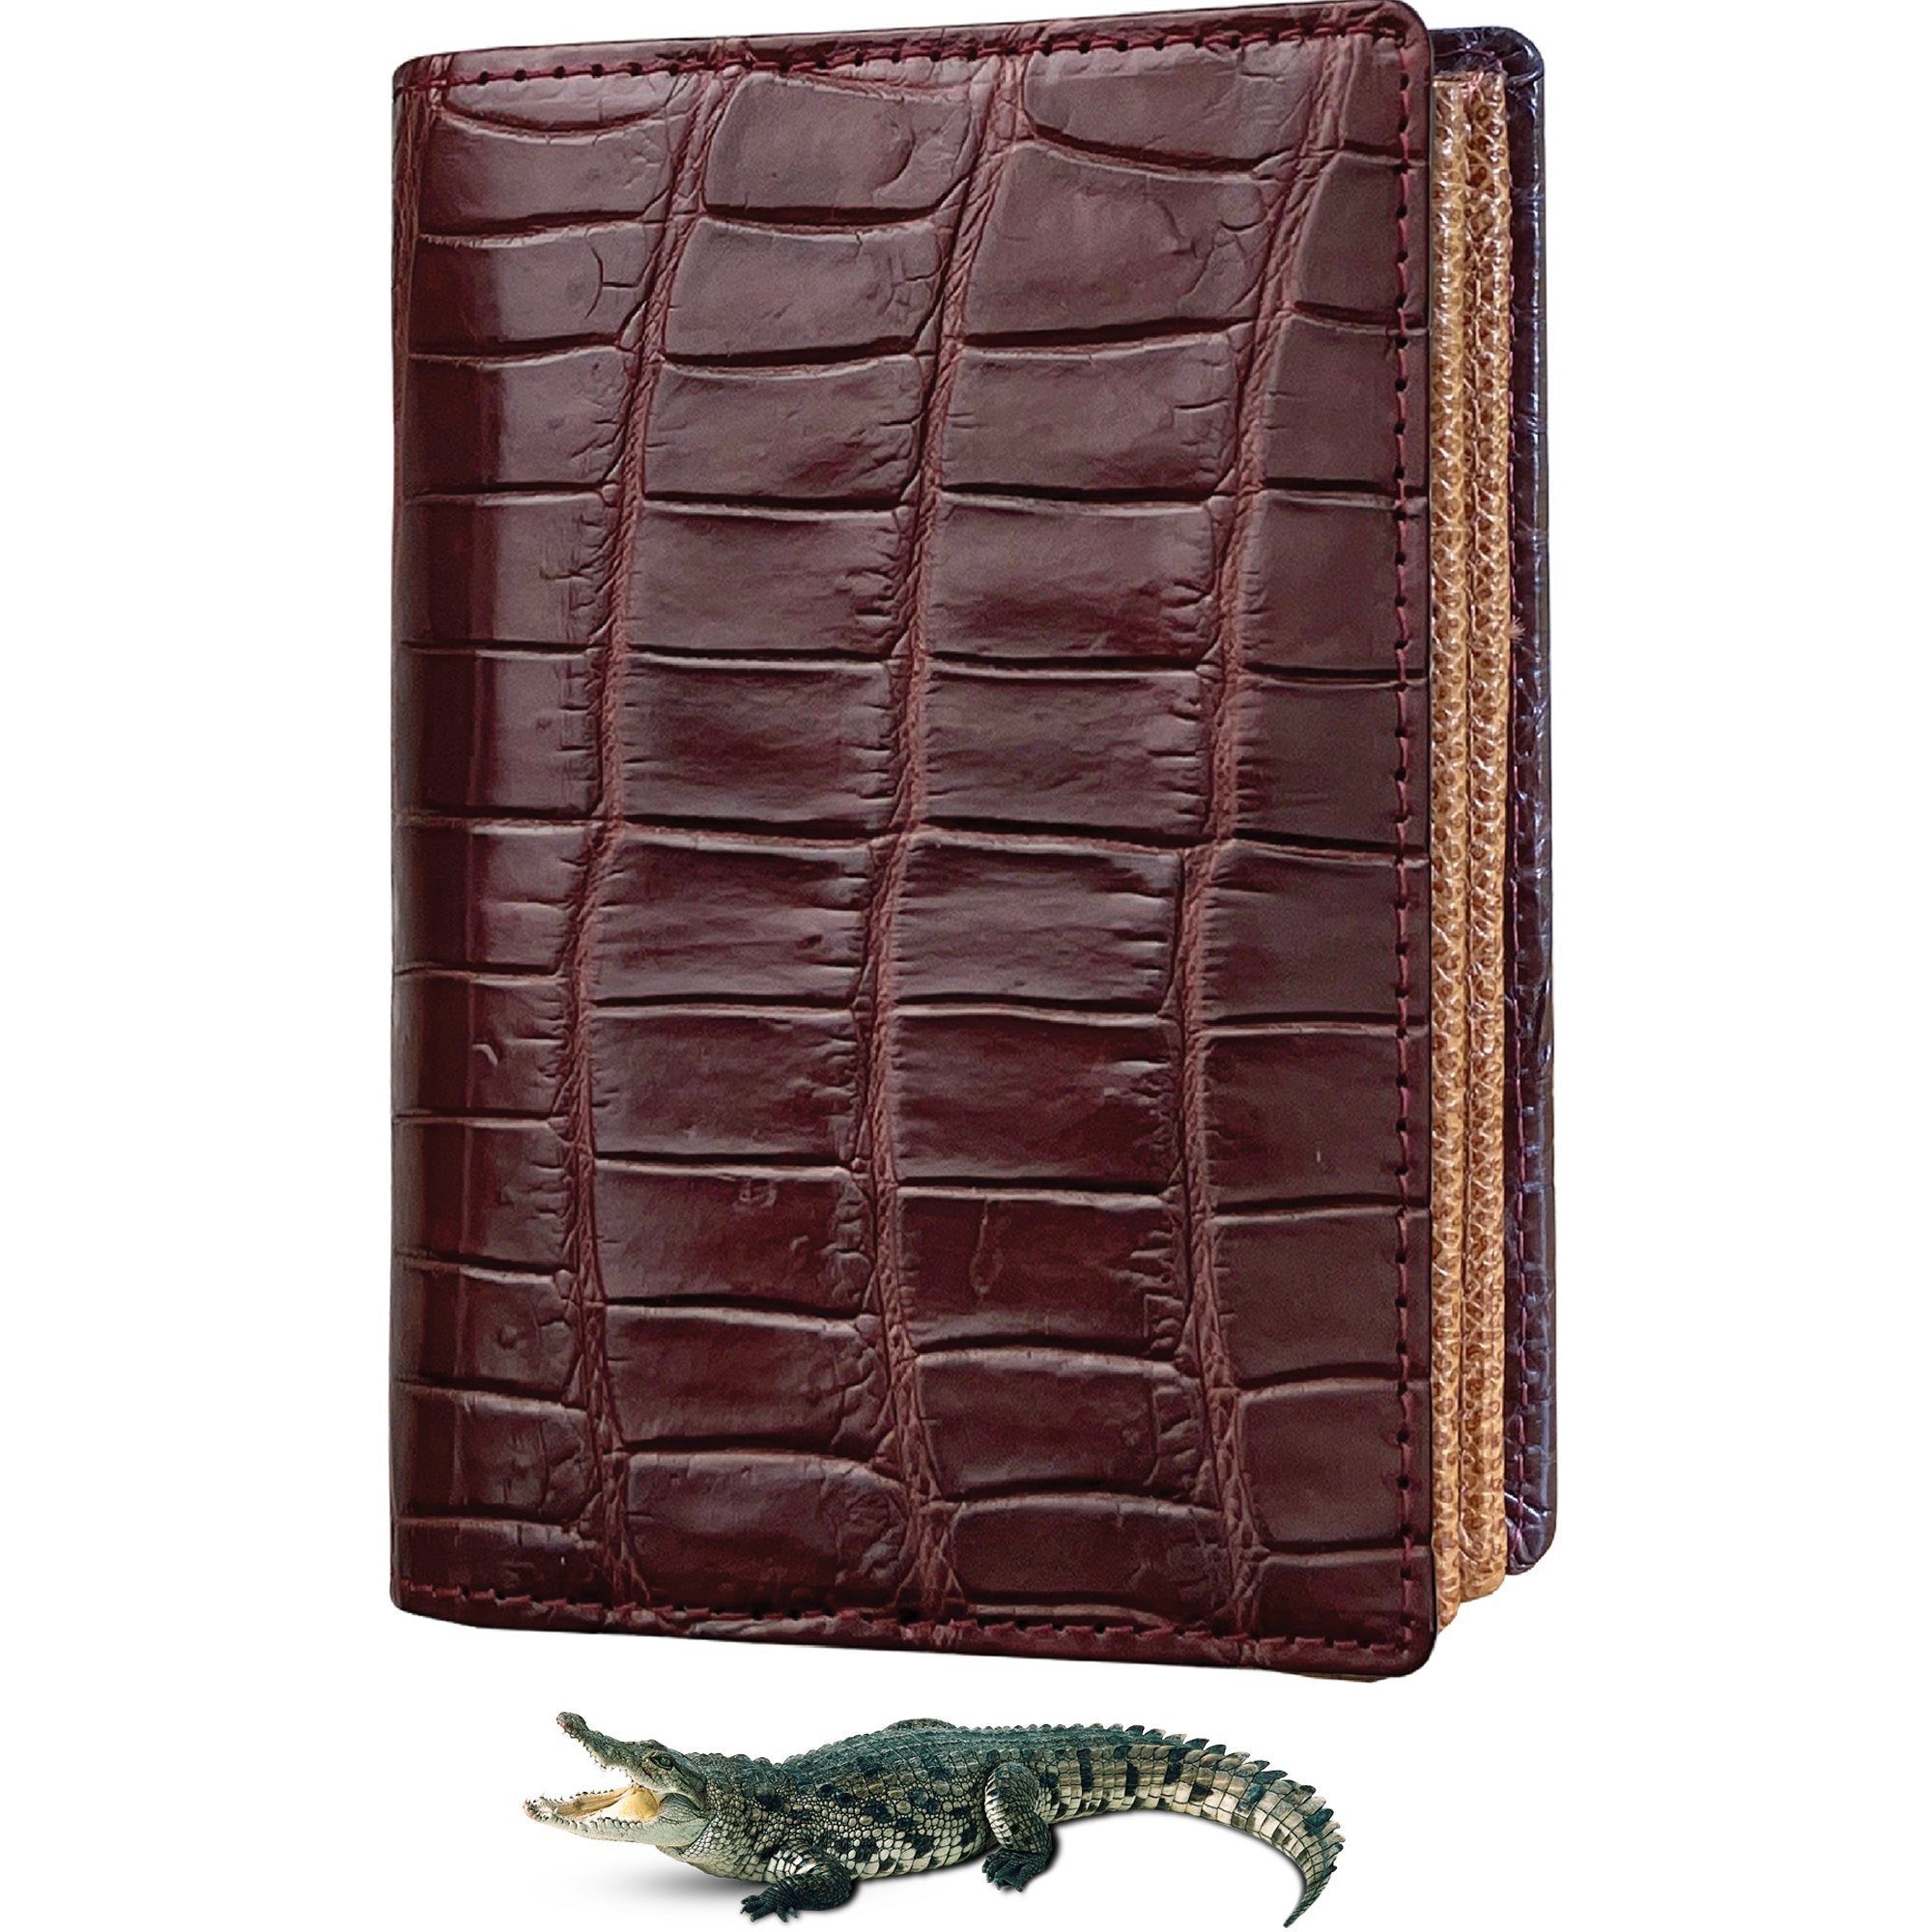 Large Capacity Alligator Leather Vertical Bifold Wallet | Crocodile Credit Card Holder for Men with 15 Card Slots | Dark Brown DUN36 - Vinacreations